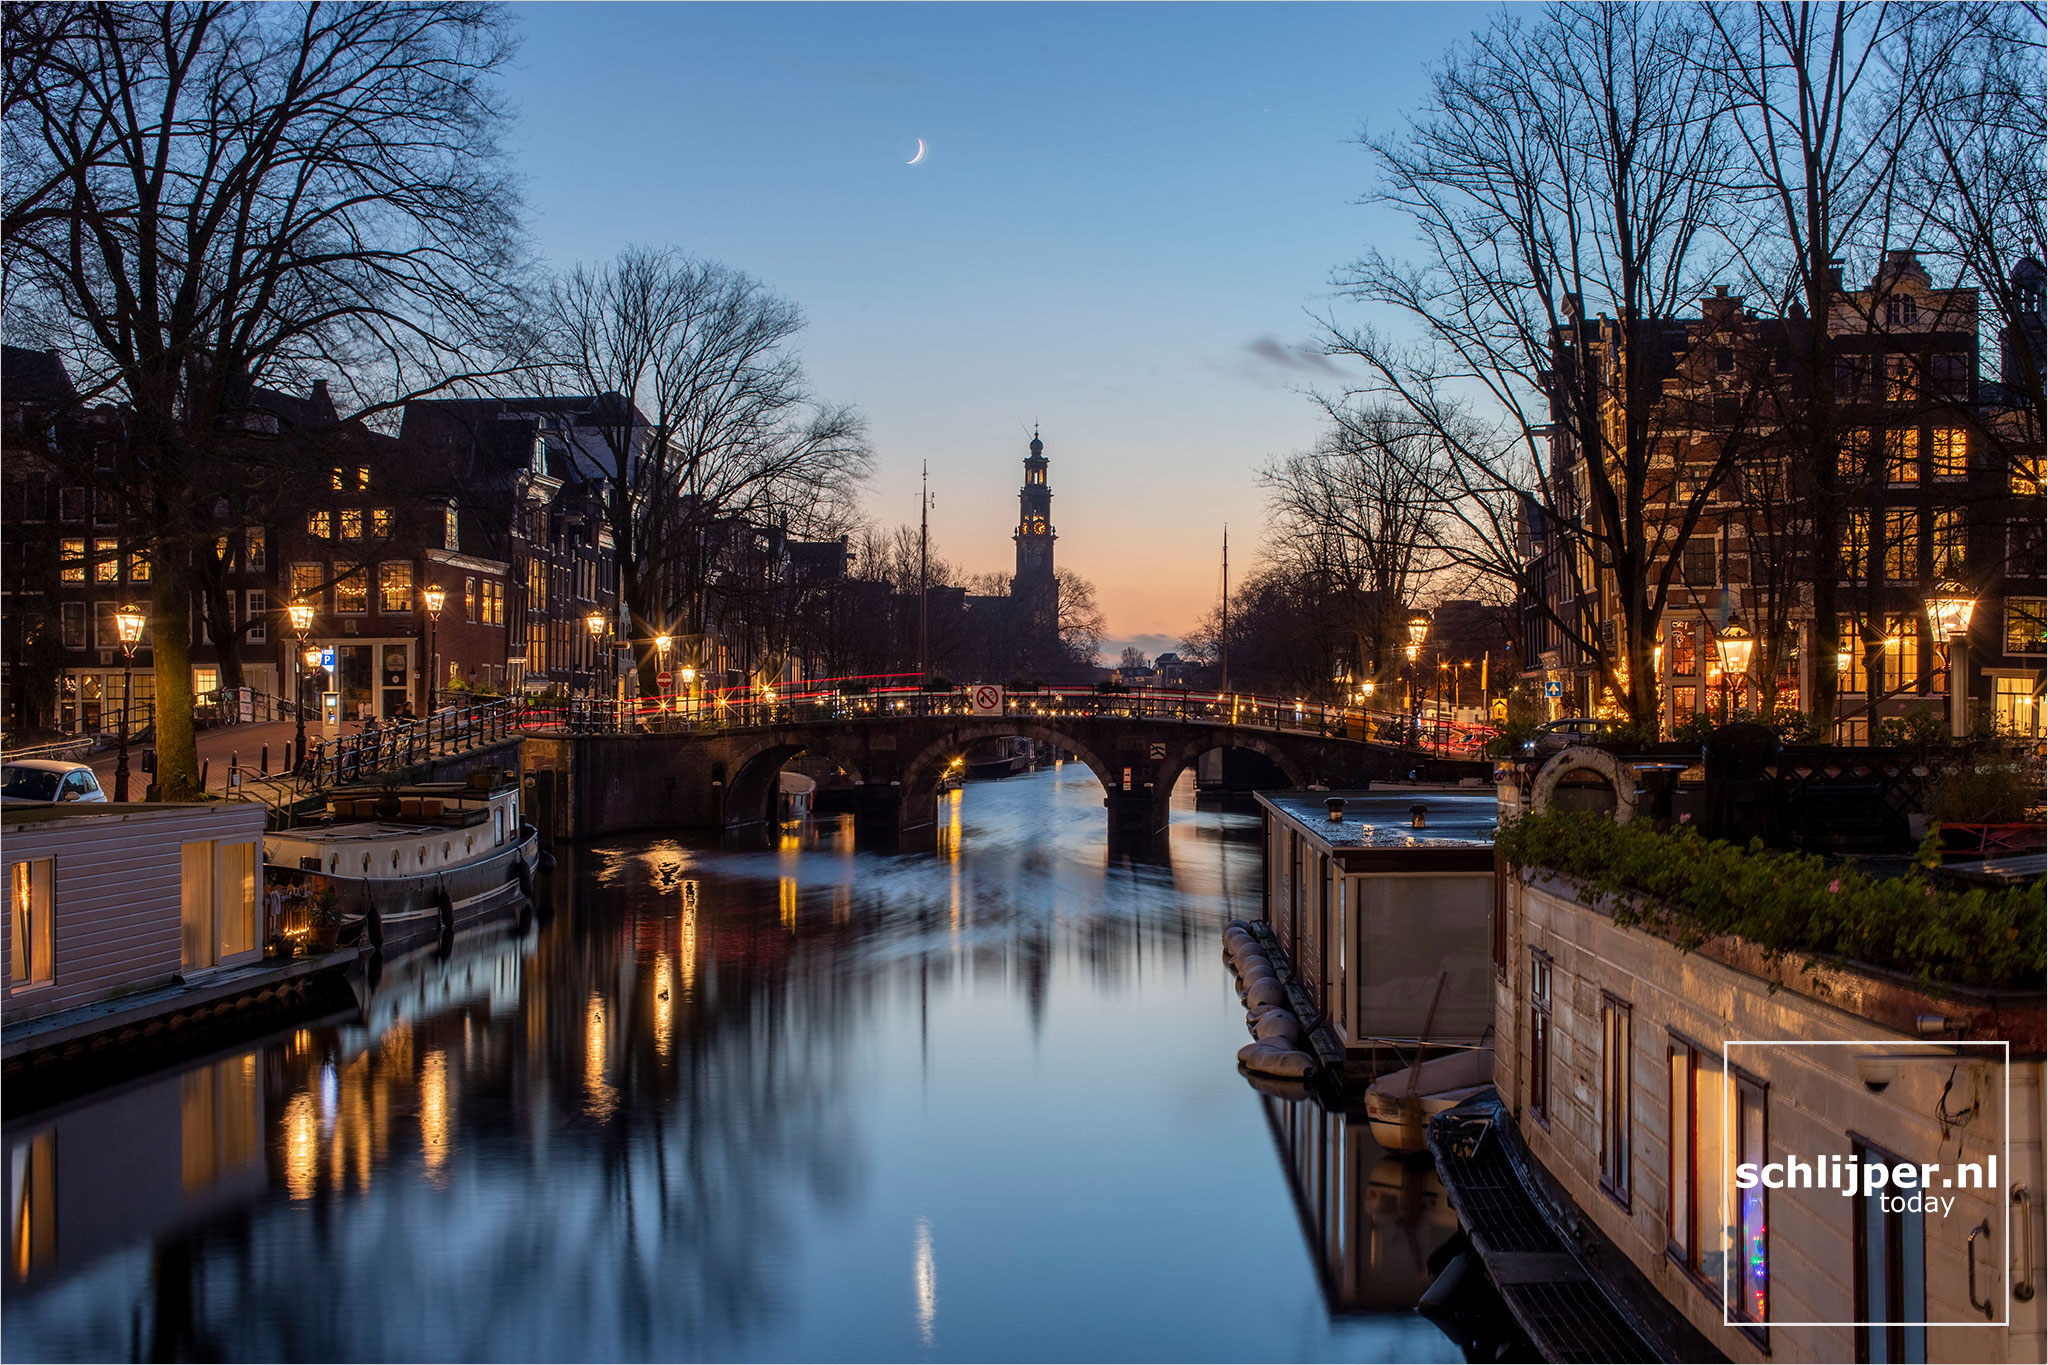 The Netherlands, Amsterdam, 17 december 2020